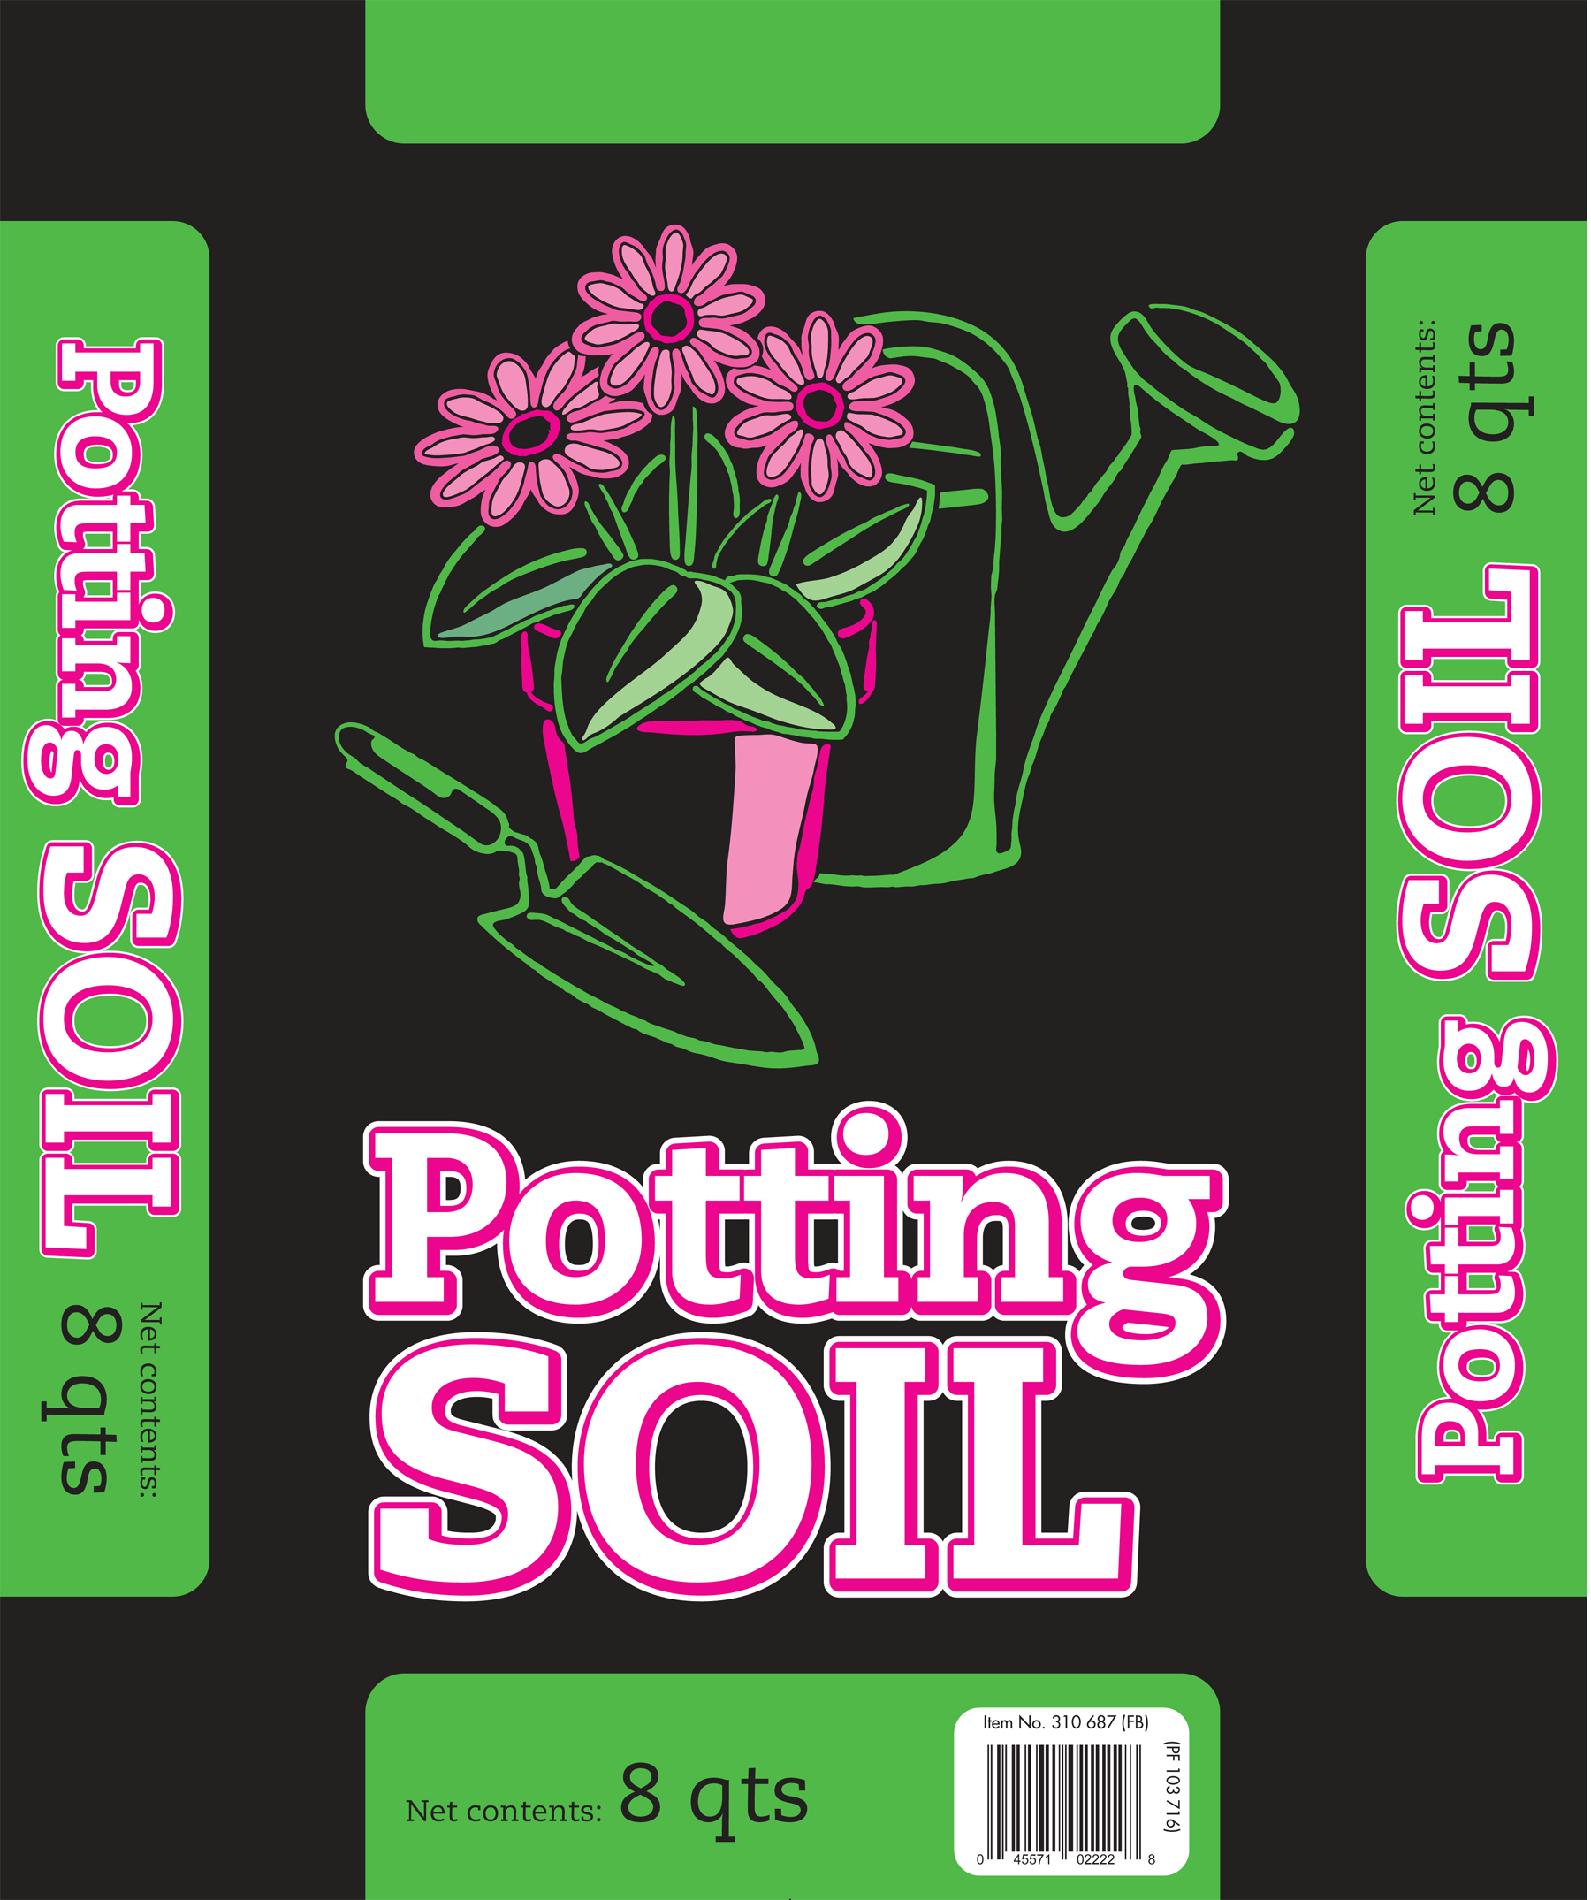 ASB Greenworks 8 qt Potting Soil—$1.29 + FREE Pickup!